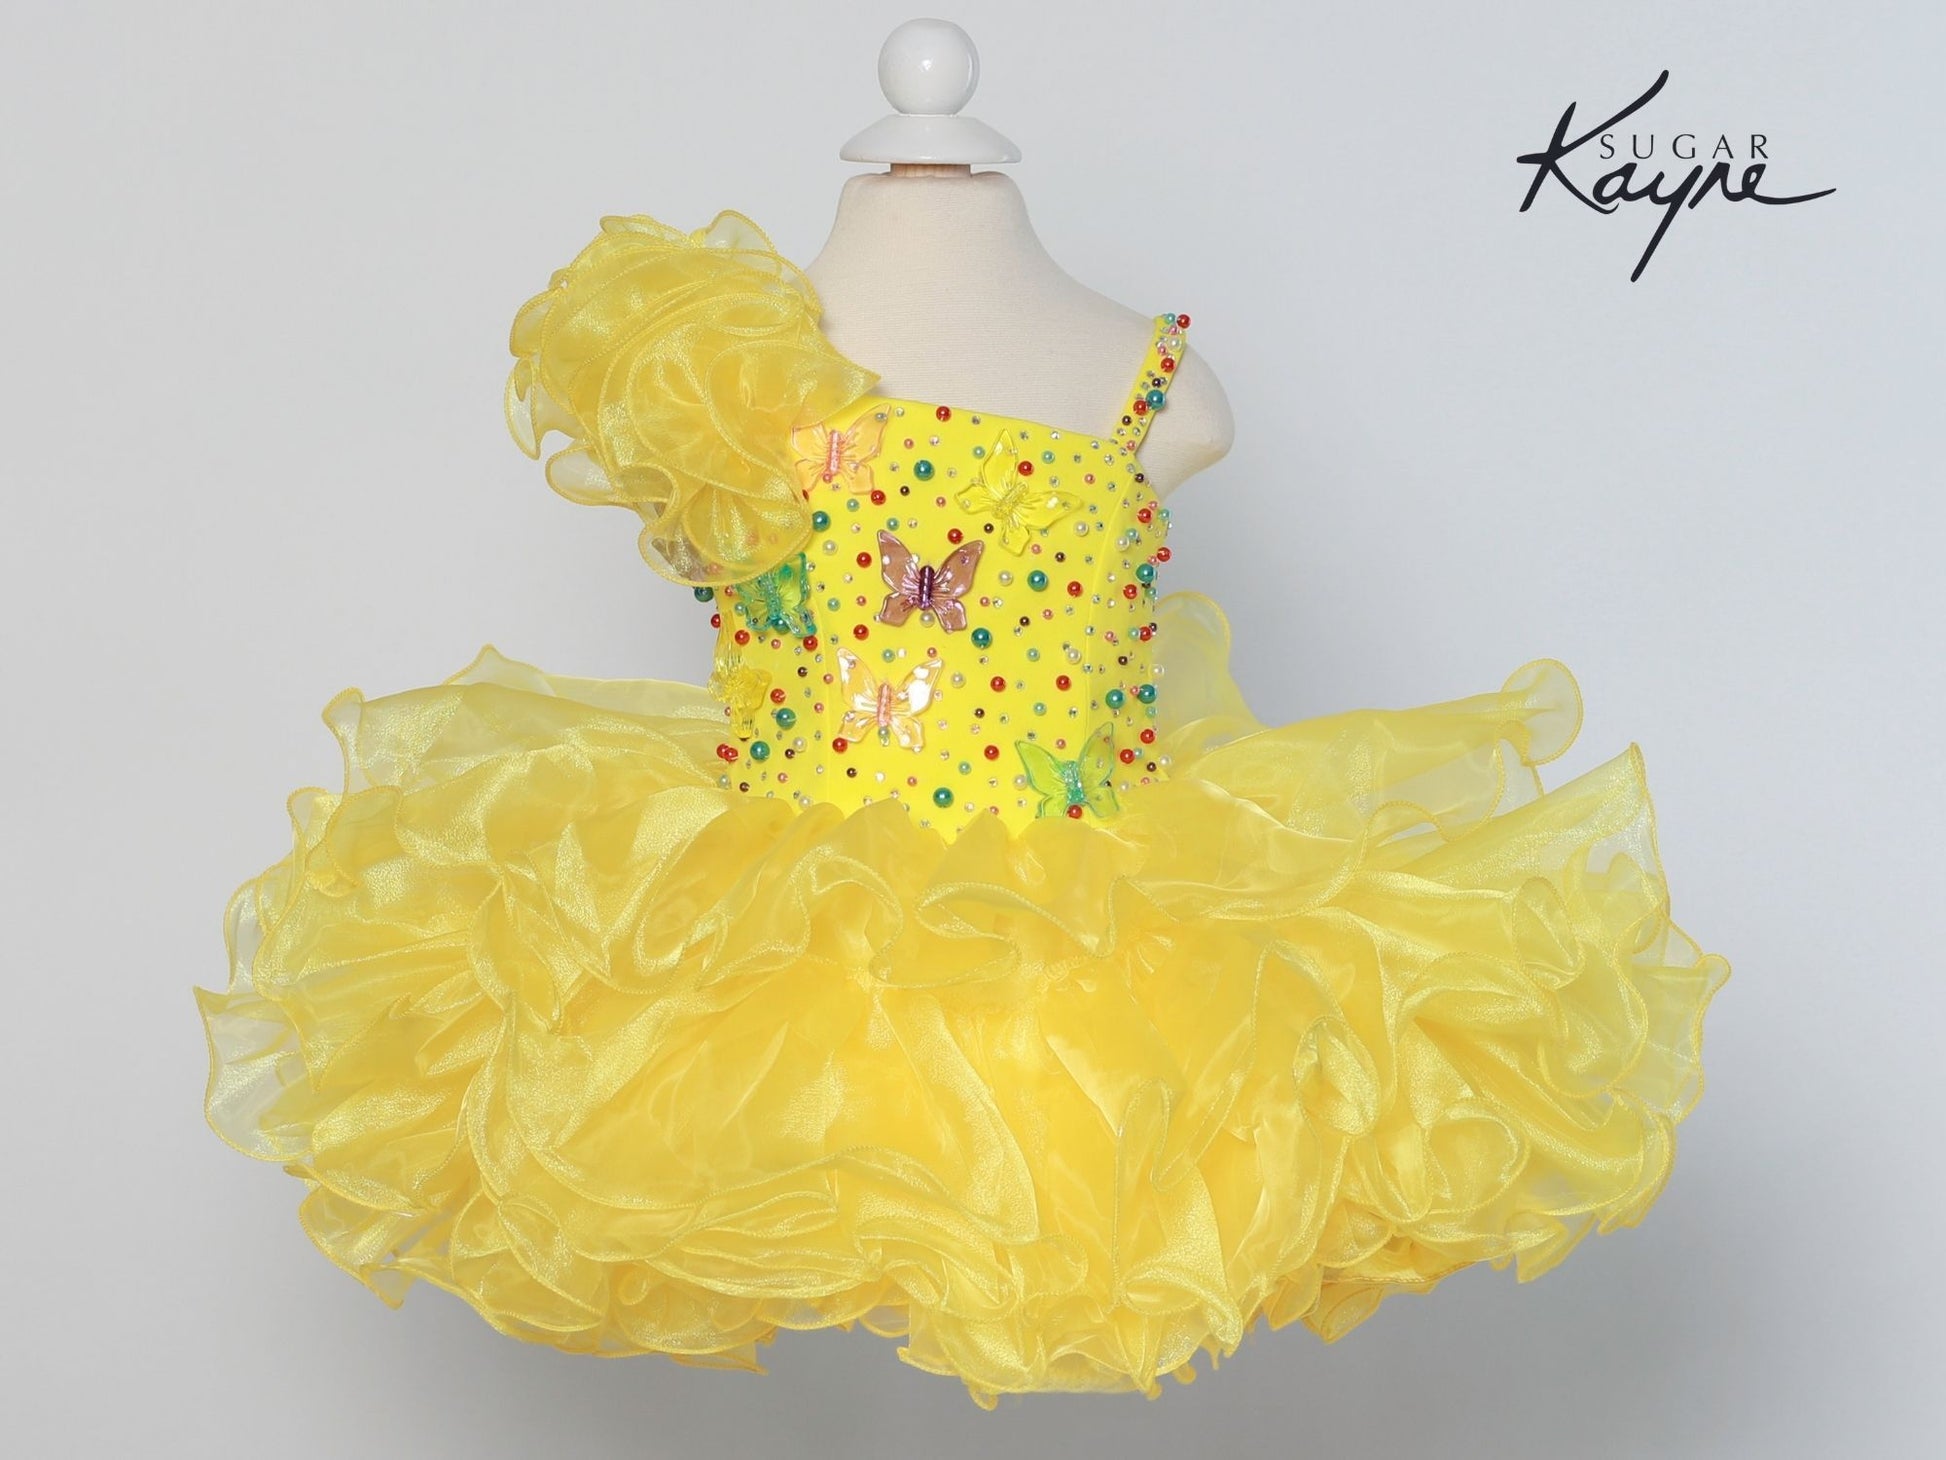 Sugar Kayne C209 Short Cupcake Ruffle One Shoulder Girls Pageant Dress Butterflies Great for any age! Corset Back  Sizes: 0M, 6M, 12M, 18M, 24M, 2T, 3T, 4T, 5T, 6T  Colors: White/Multi, Yellow/Multi, Aqua/Multi